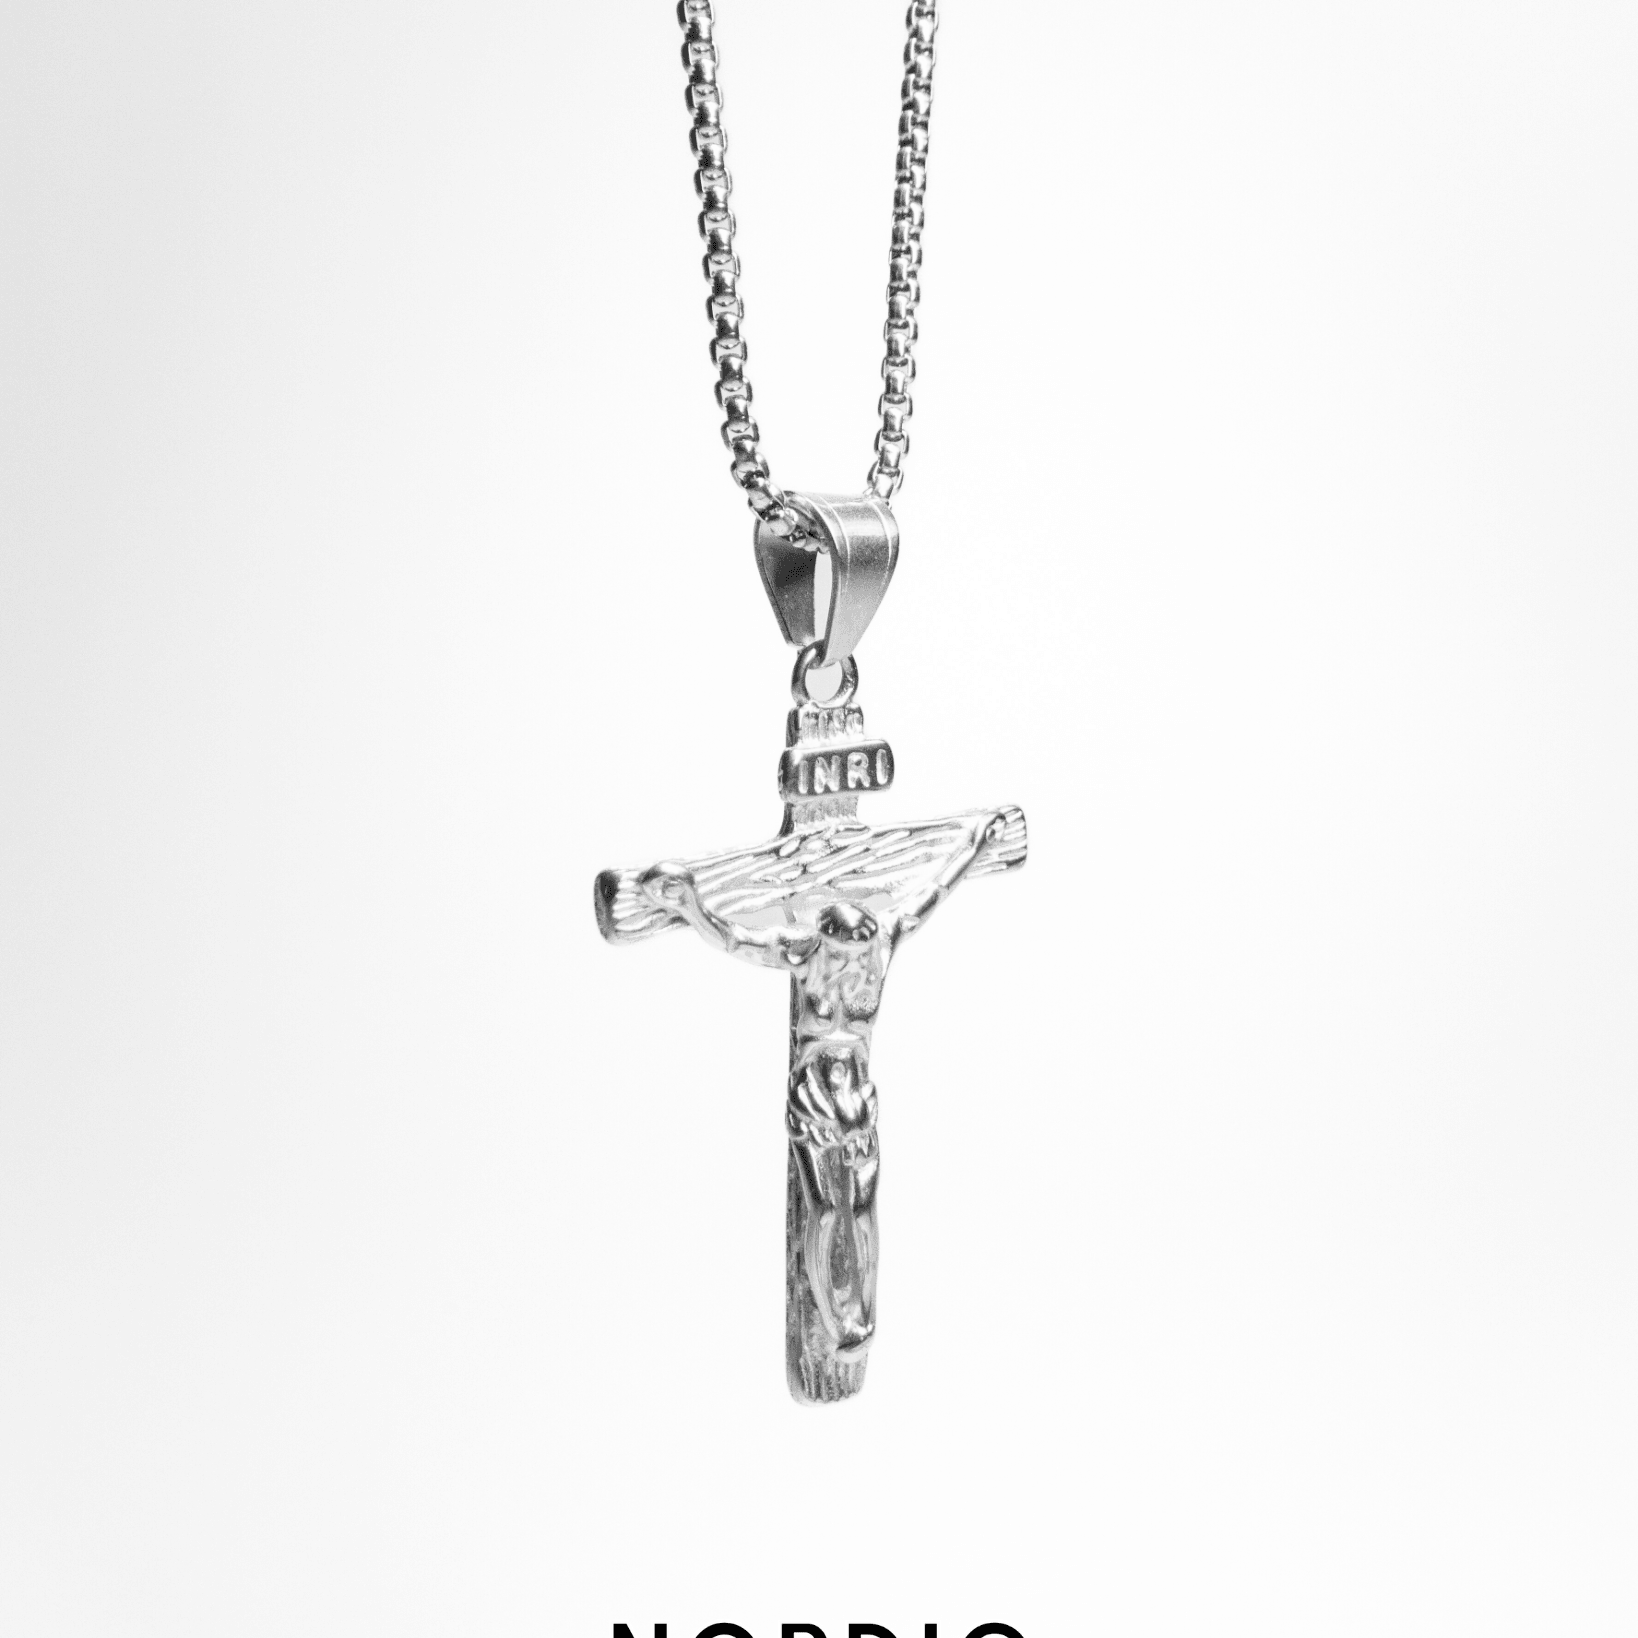 Krucifix (Kors) Halsband - Silver/Guld - Nordic Smycken